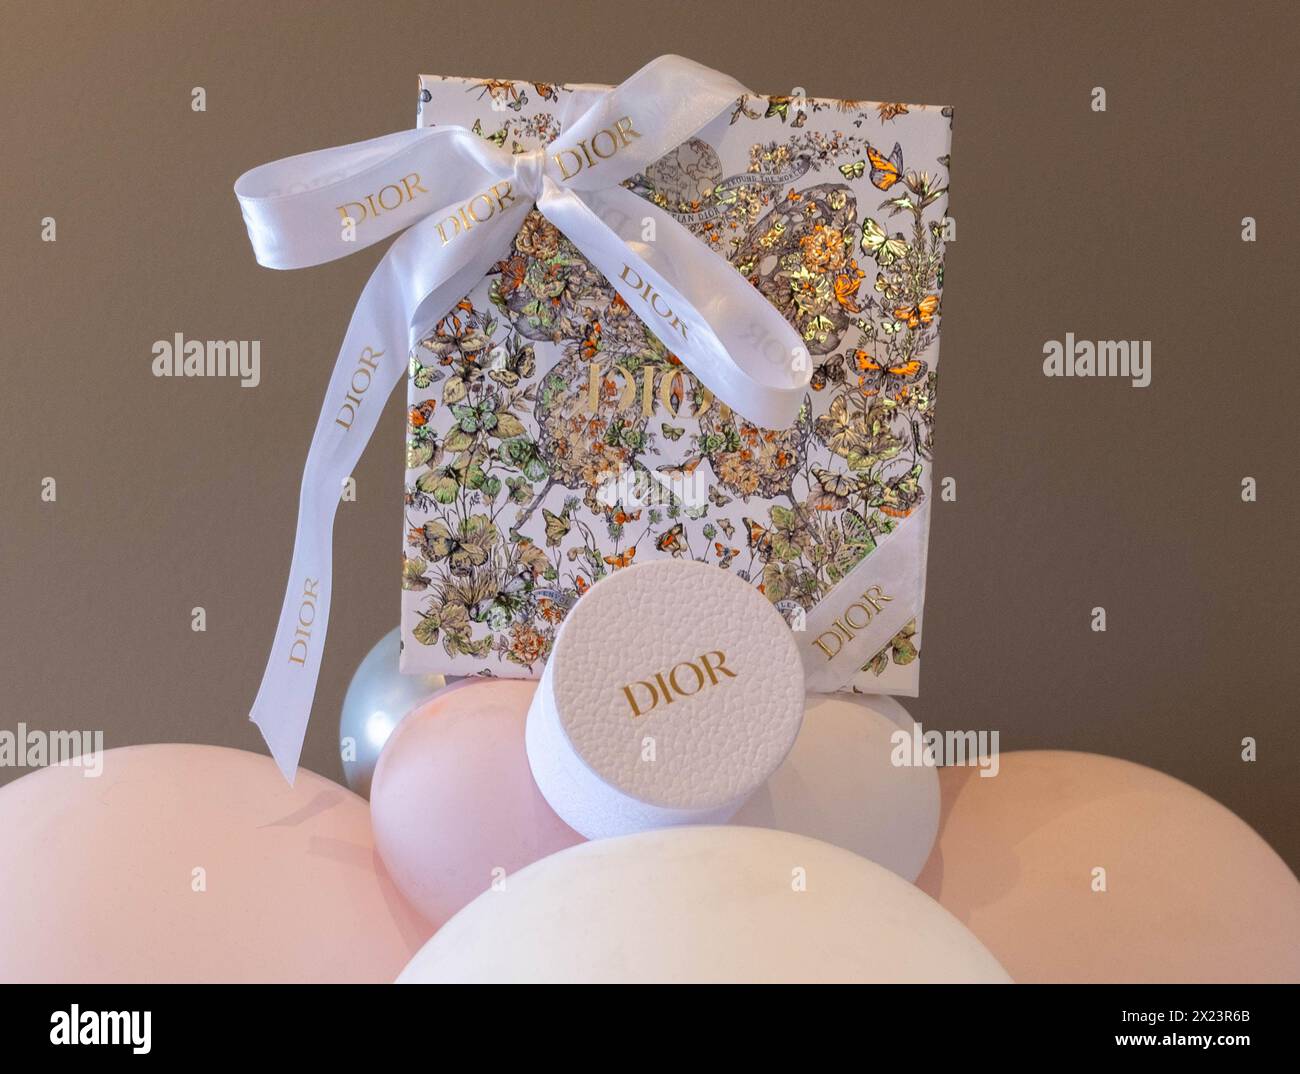 Dior Gift Box Stock Photo